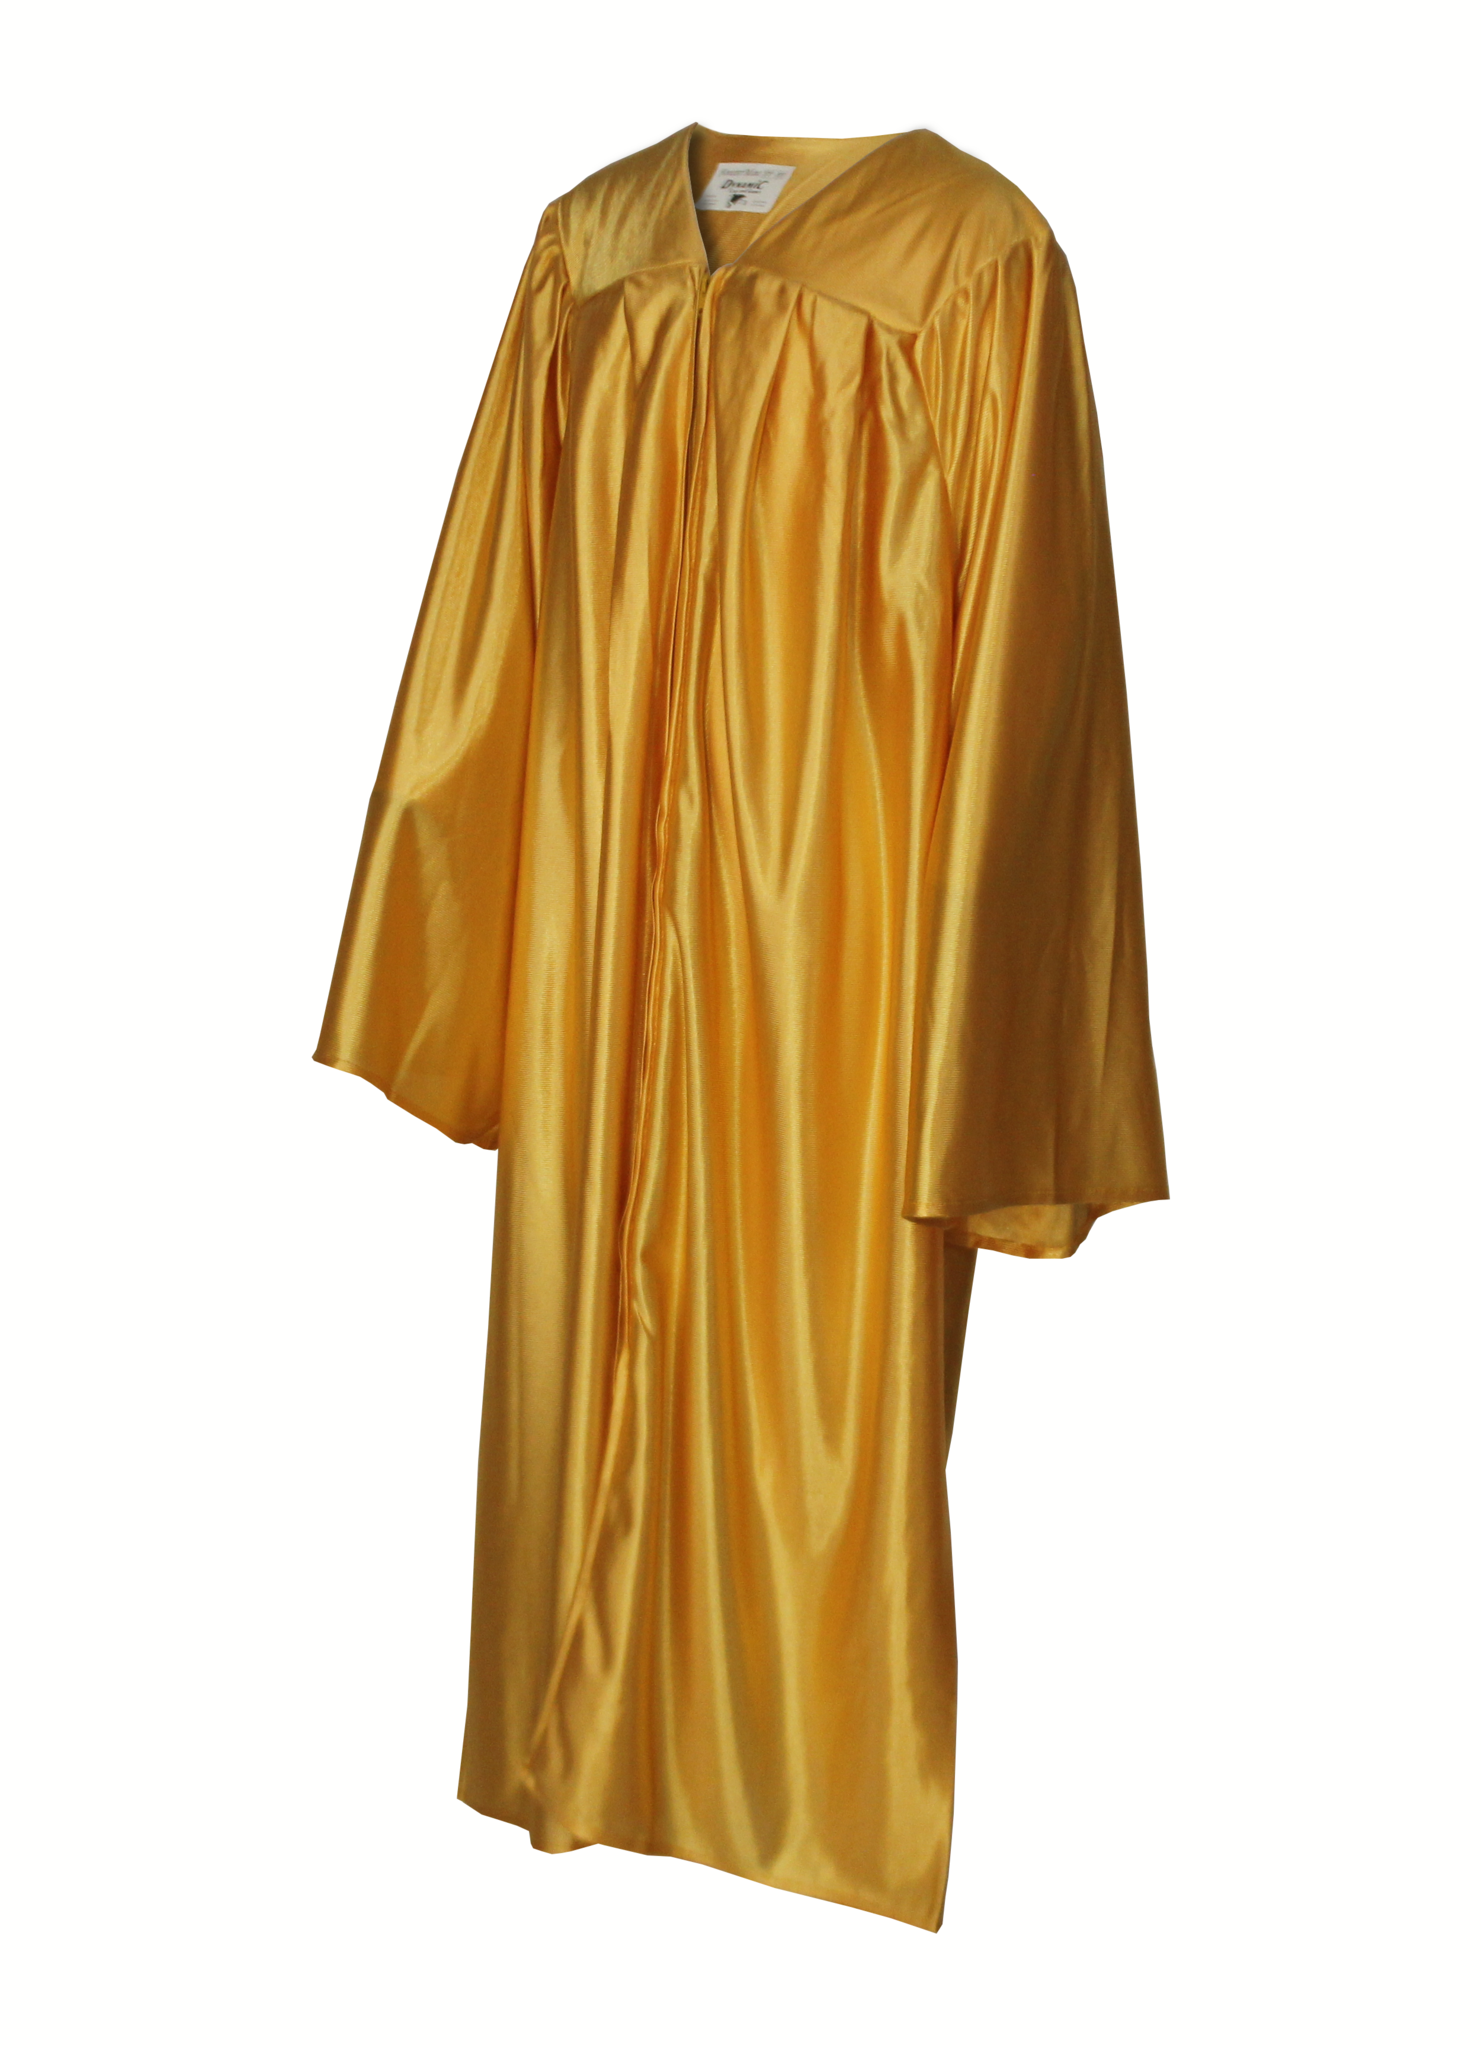 Shiny Antique Gold Choir Gown